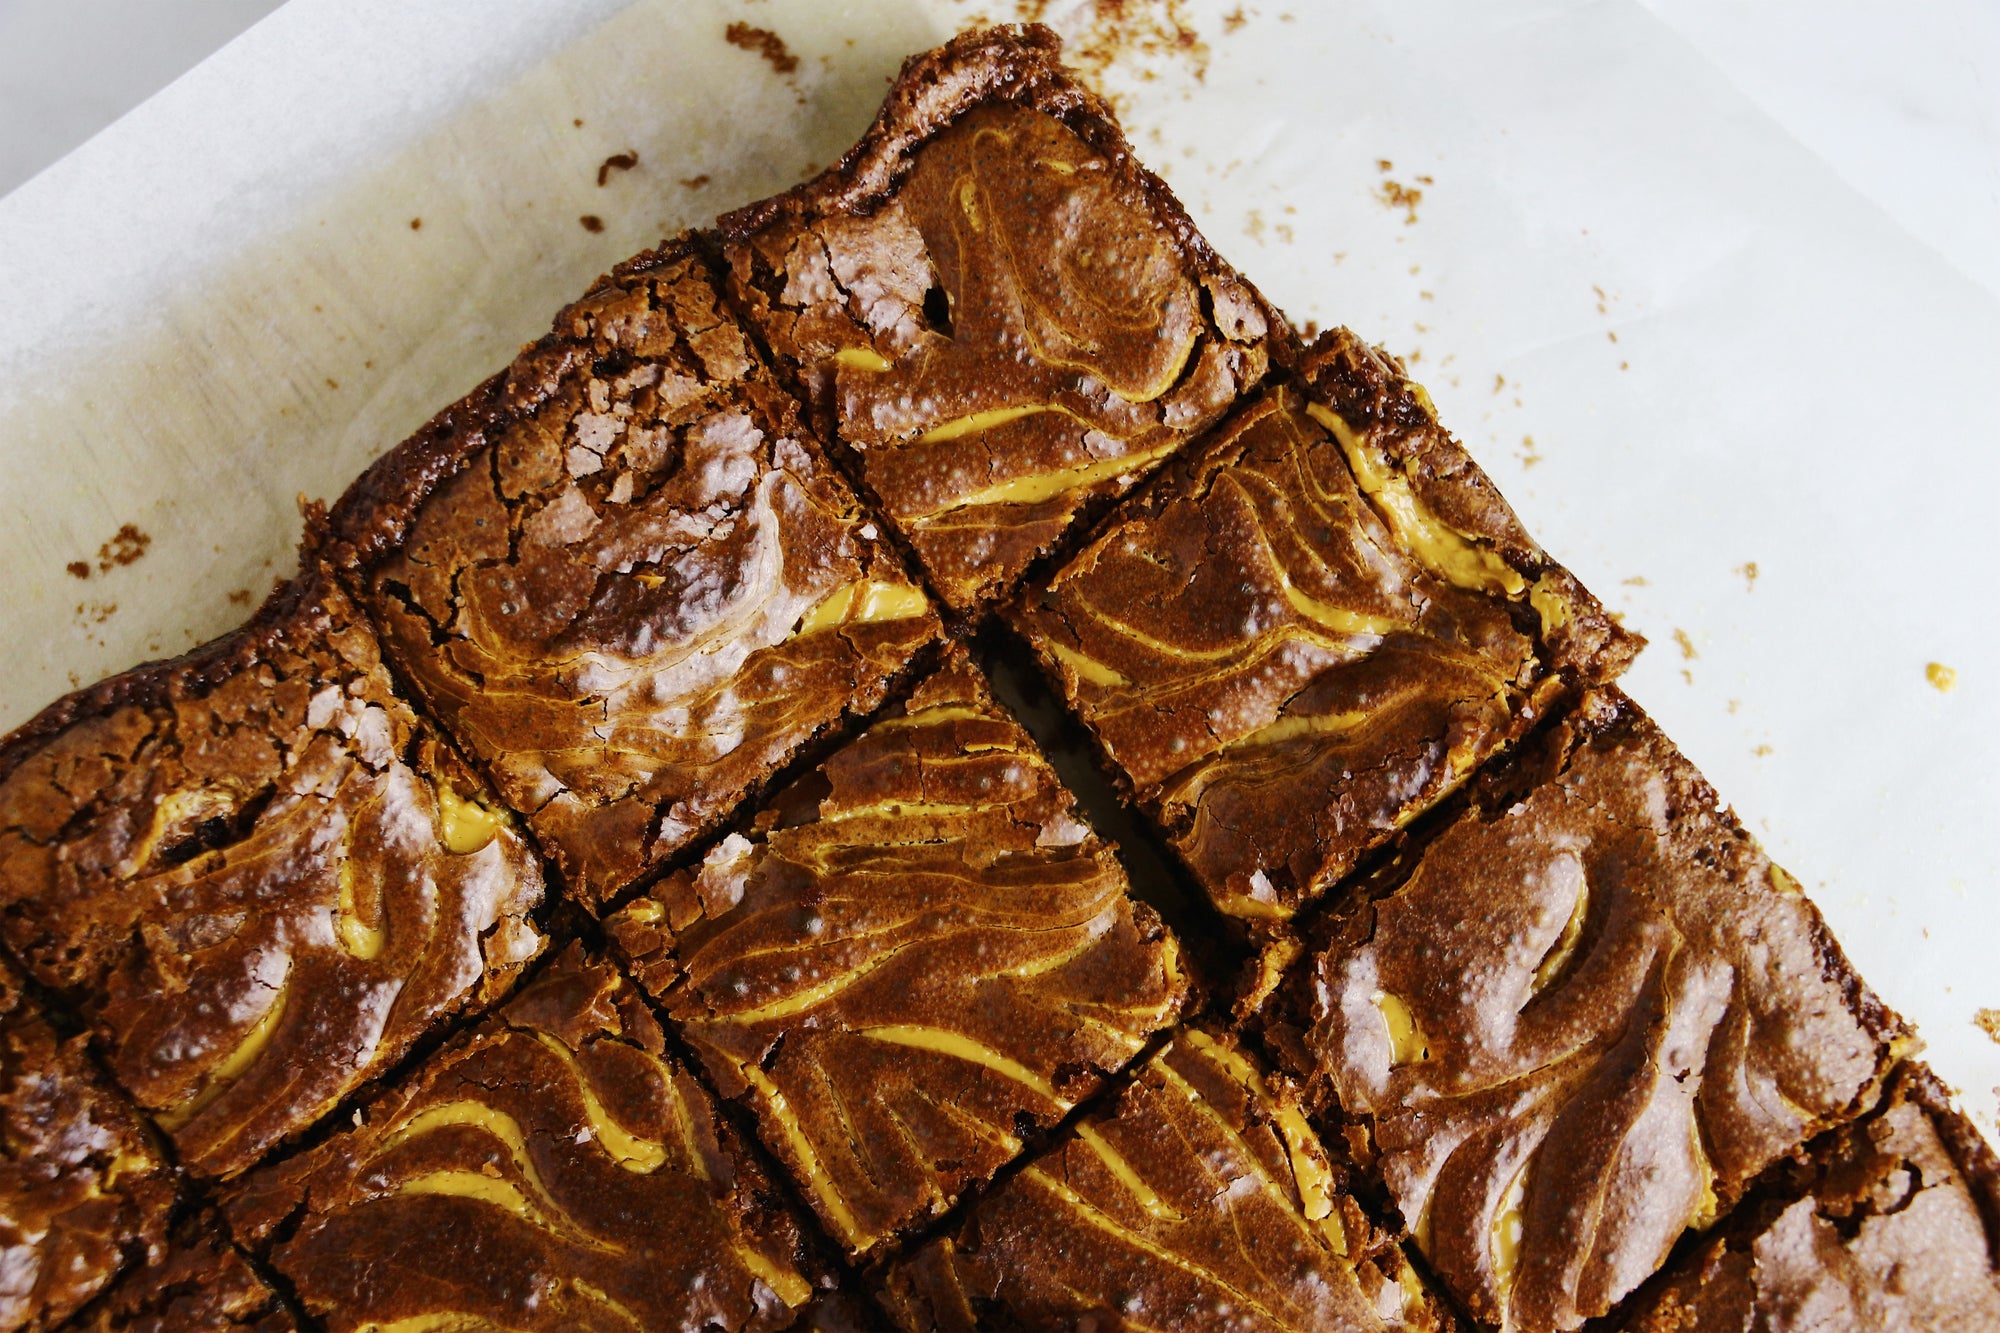 February's Kit: Peanut Butter Swirled Fudge Brownies